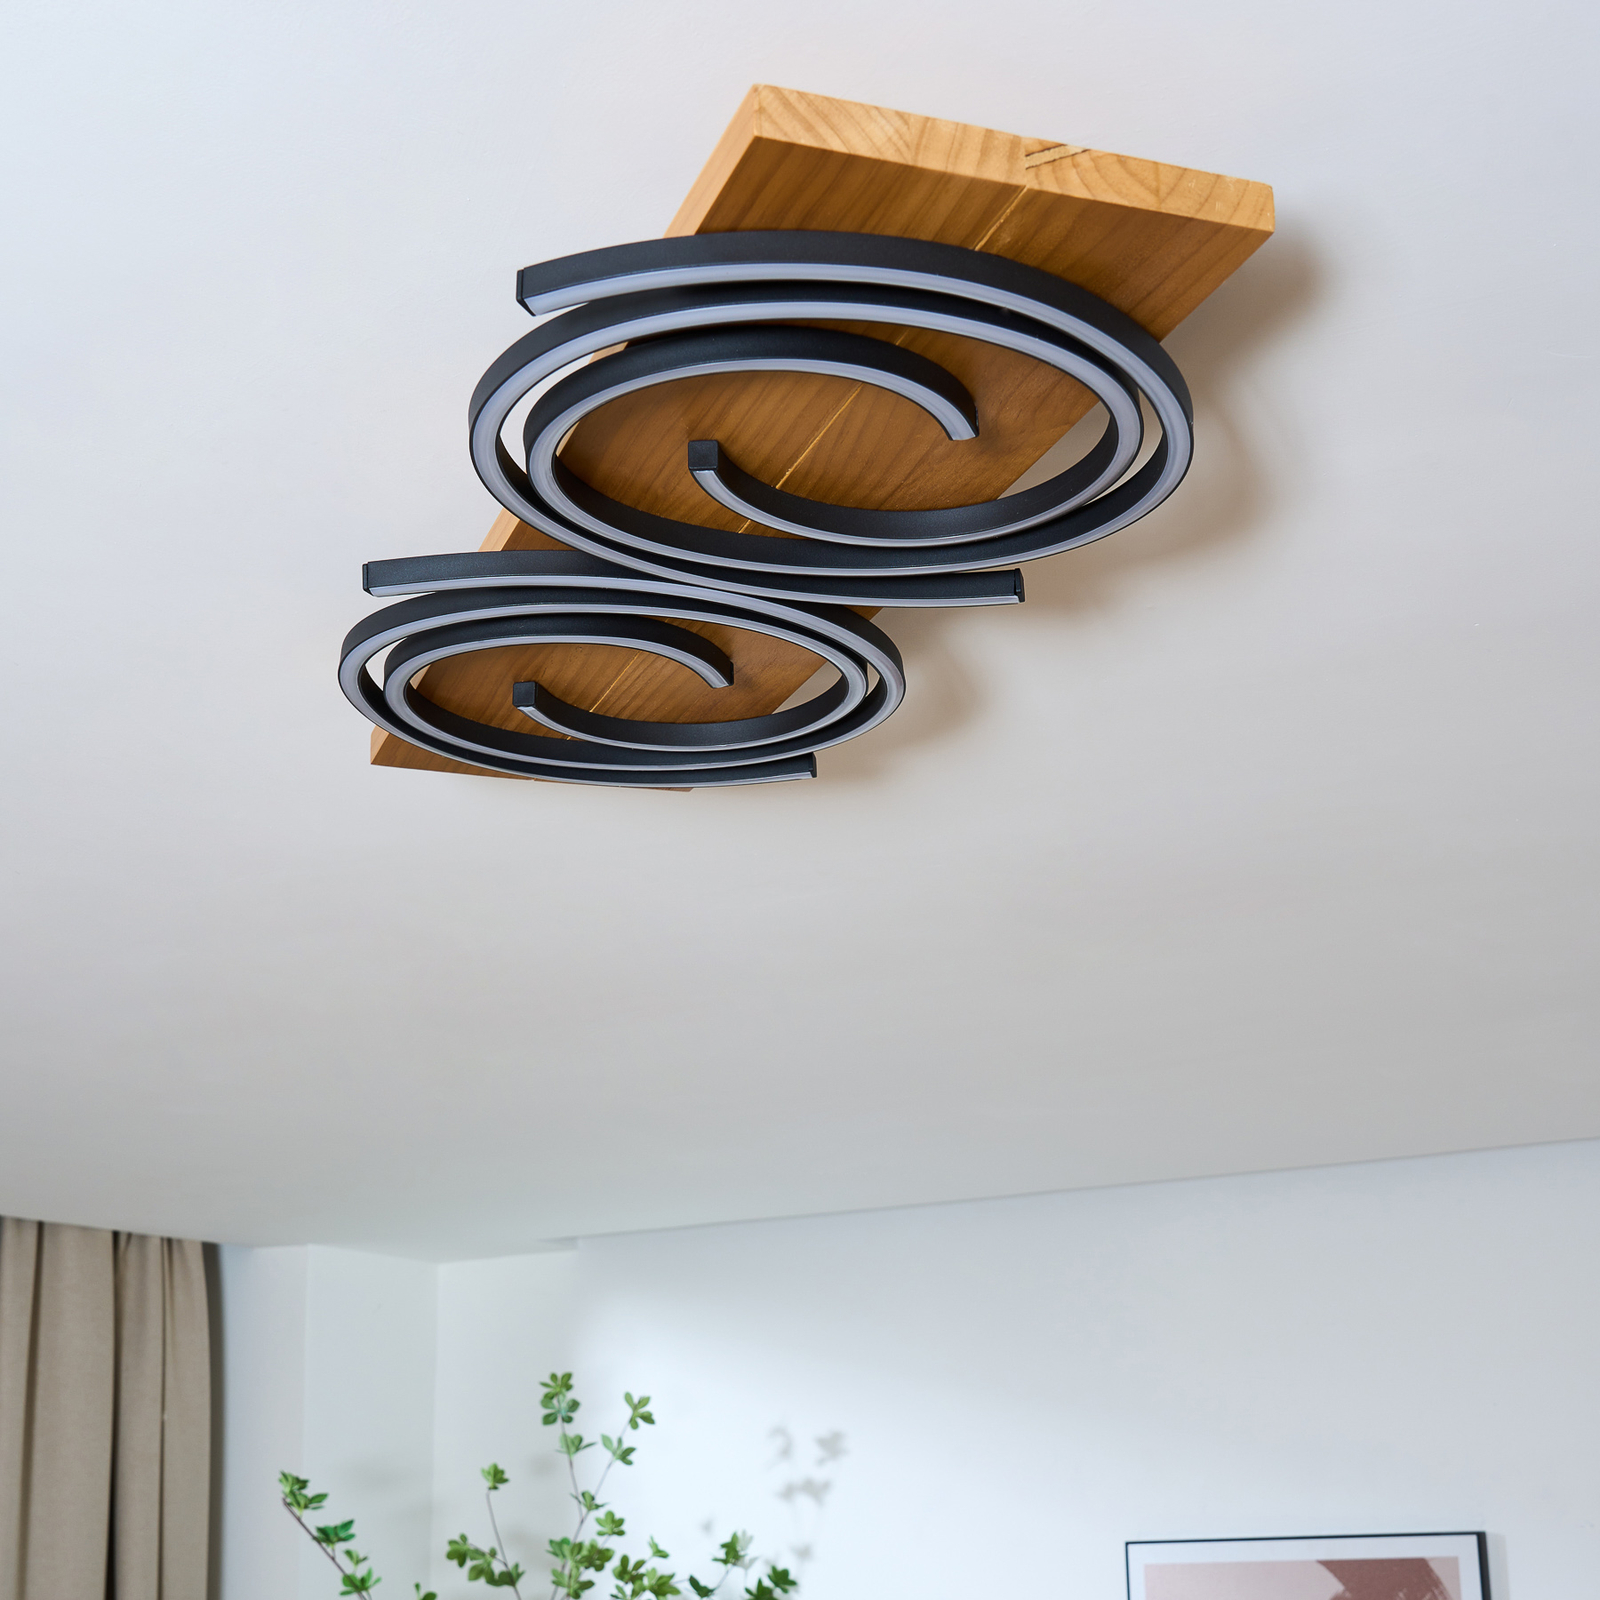 LED-Deckenleuchte Rifia, braun, Länge 70 cm, 2-flg. Holz